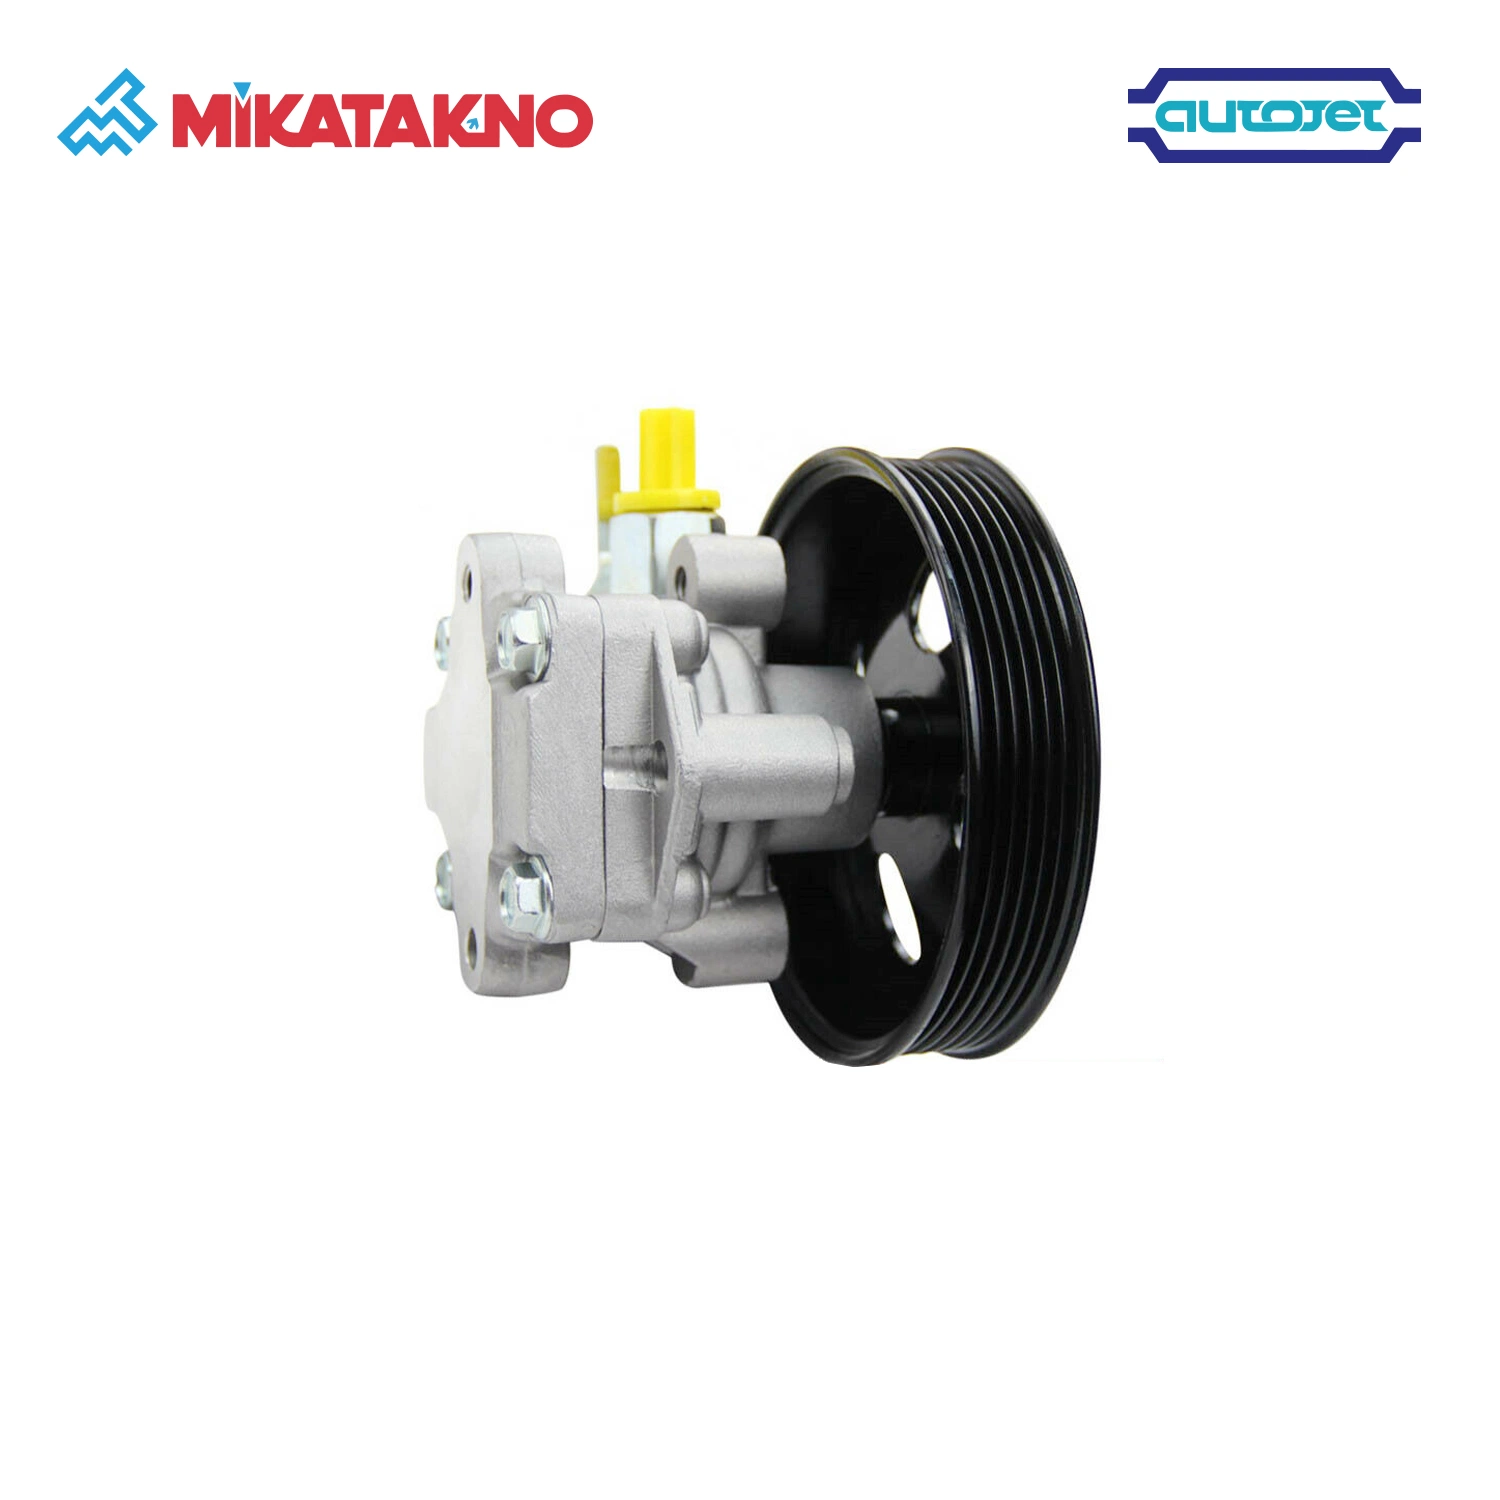 for Hyundai Sonata Hyundai Veracruz Auto Steering System. 57100 - 3K010/Best Price Supplier of Power Steering Pump